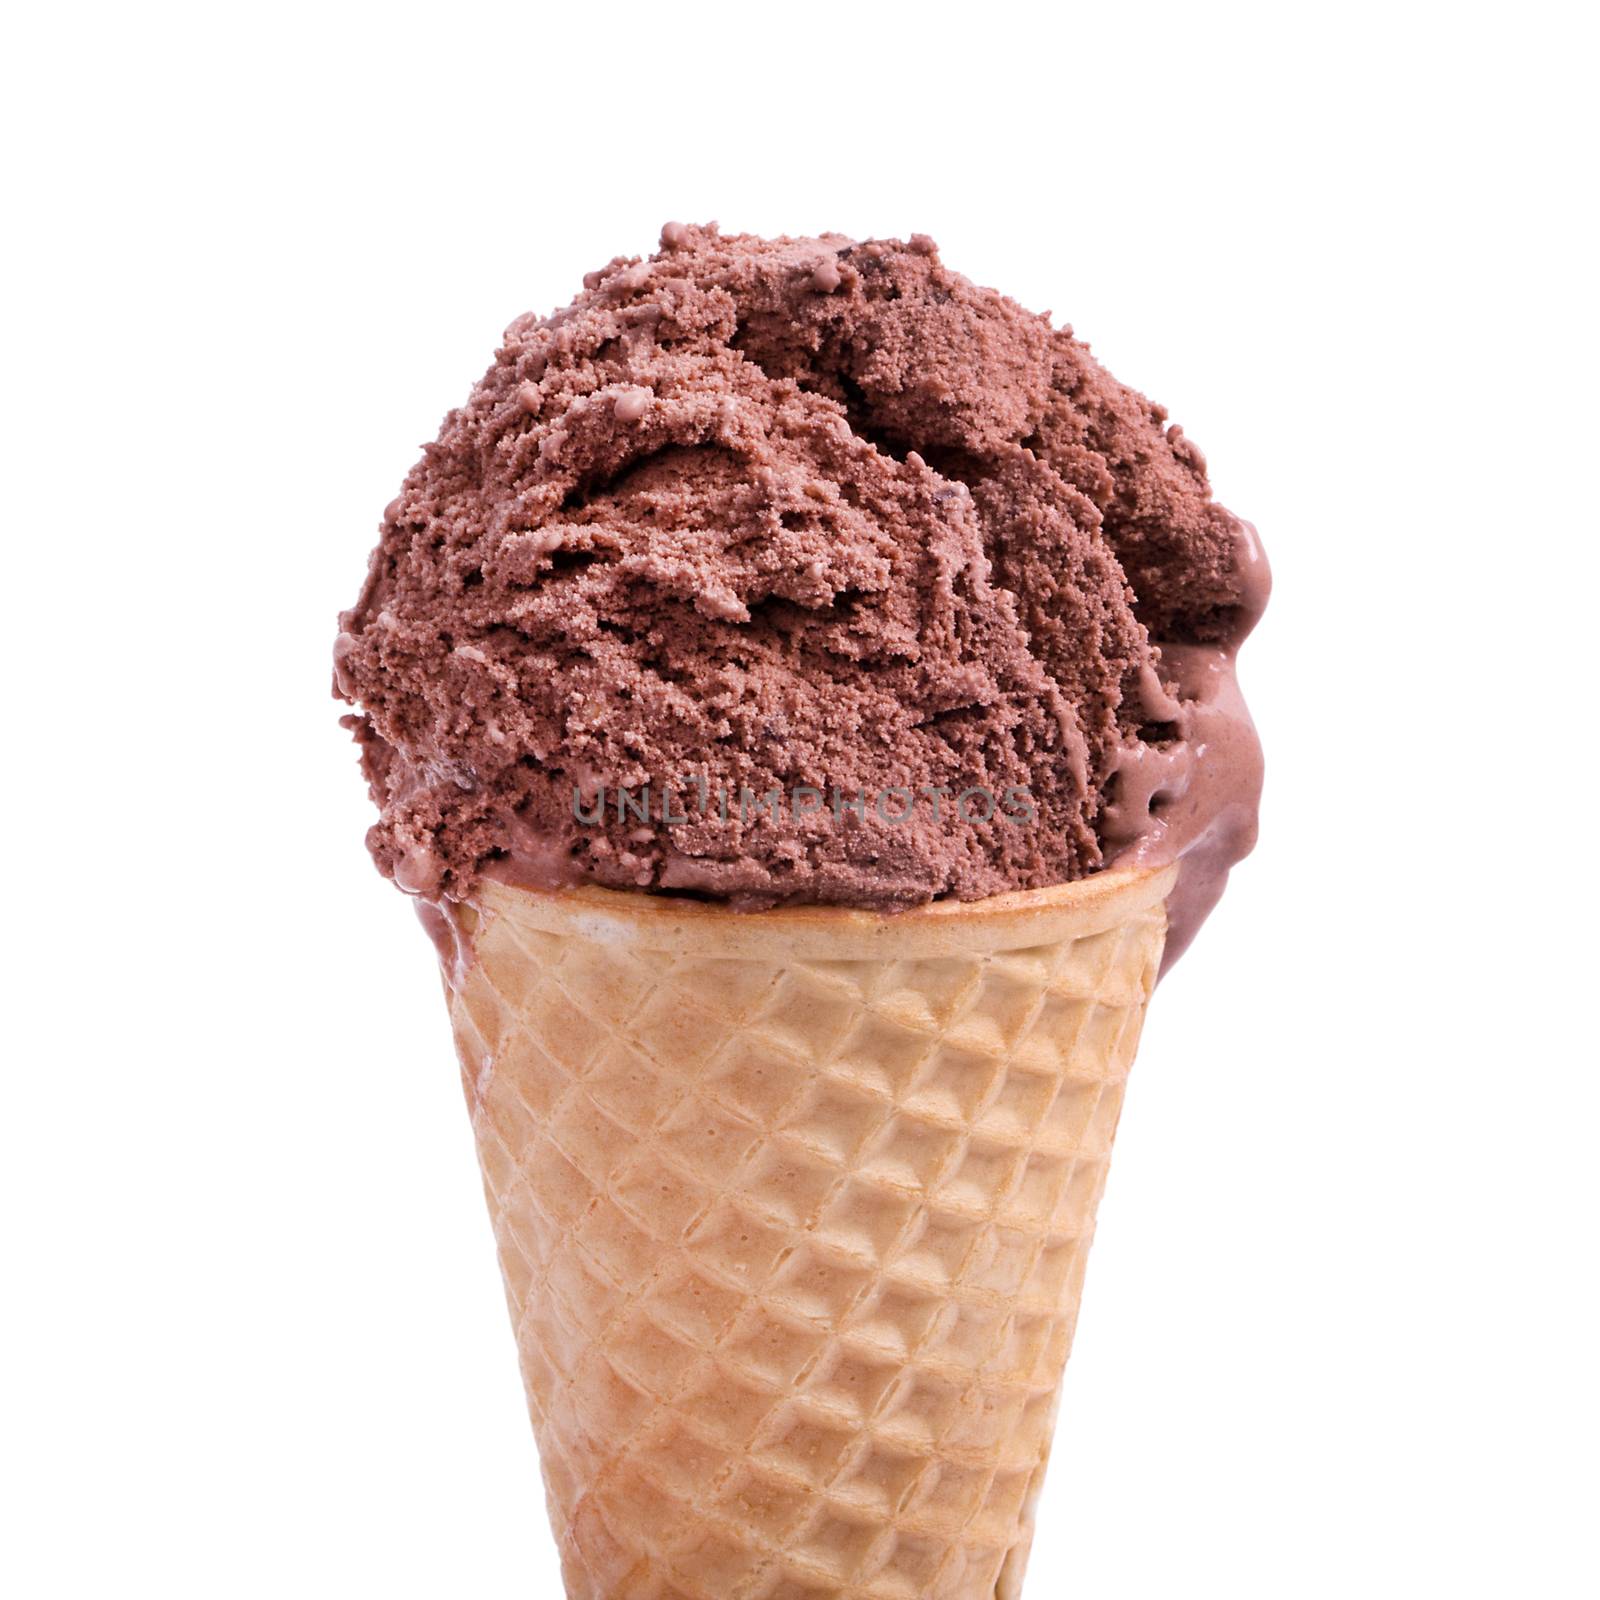 Chocolate icecream on a white background